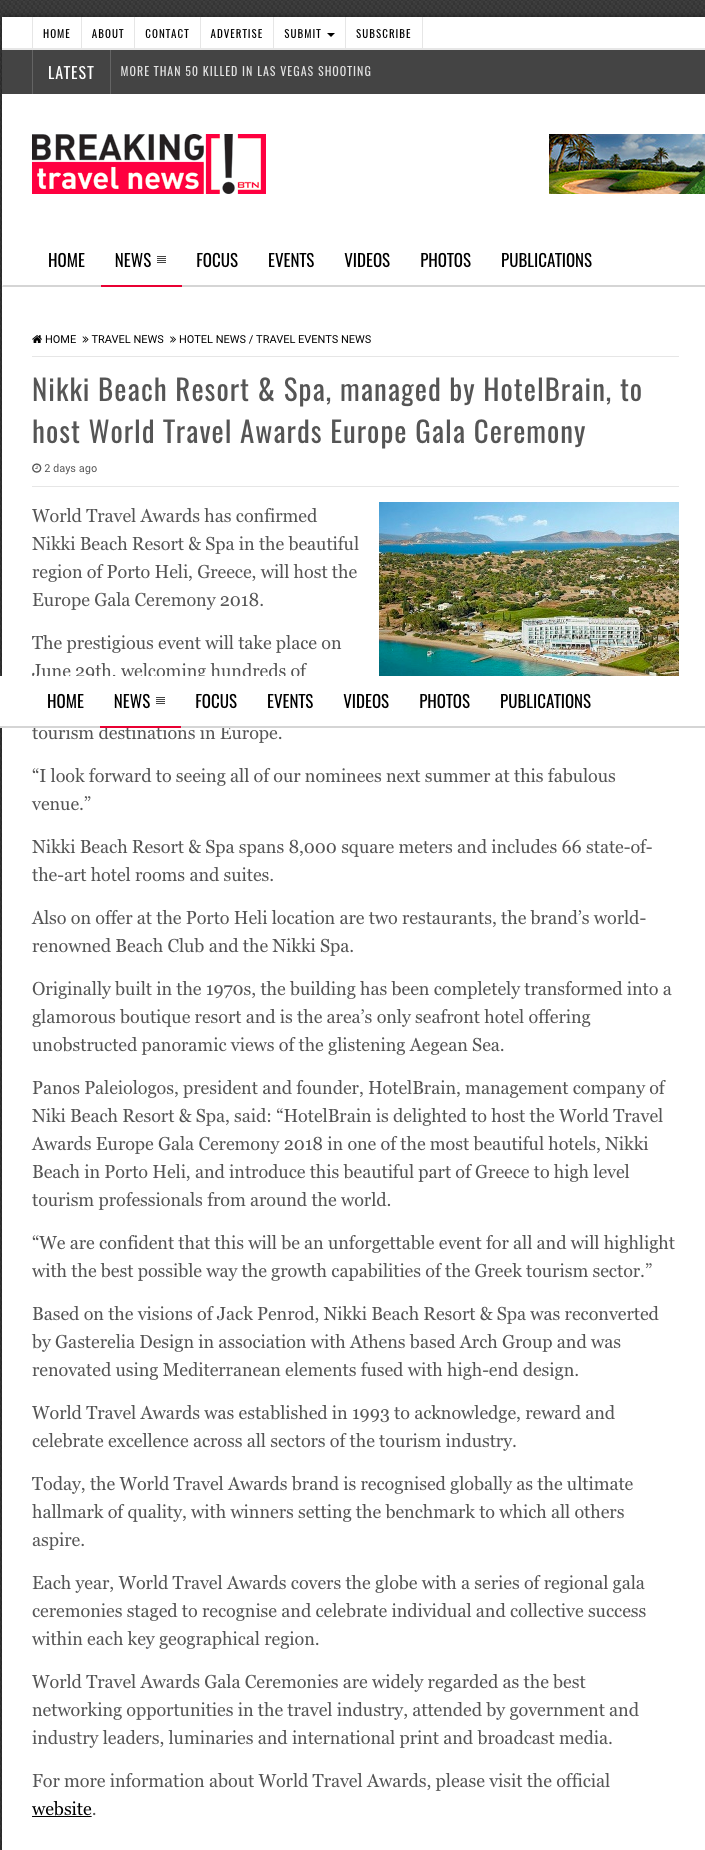 Nikki Beach Resort & Spa, managed by HotelBrain, to host World Travel Awards Europe Gala Ceremony  2 days ago